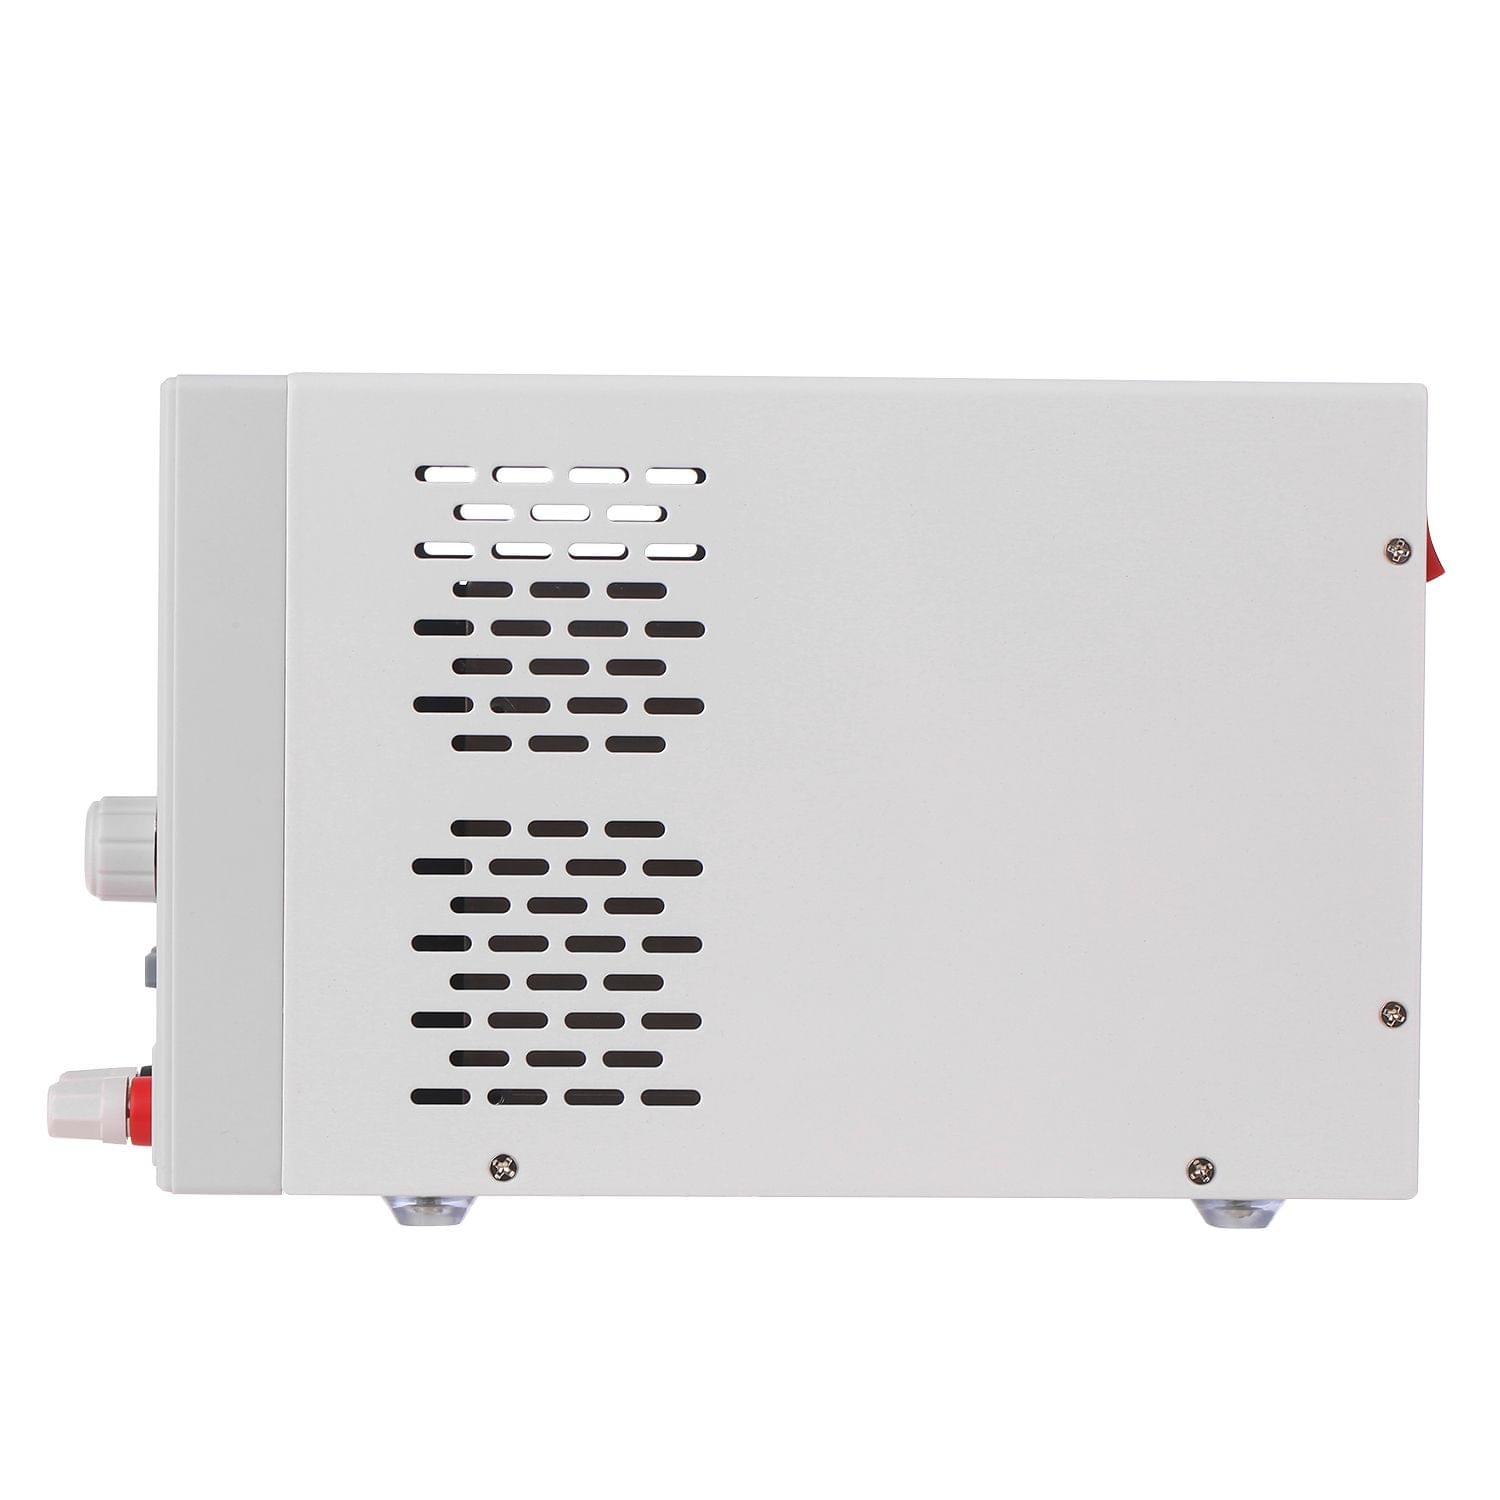 220V 0-30V 0-10A Programmable DC Power Supply Power - EU Plug